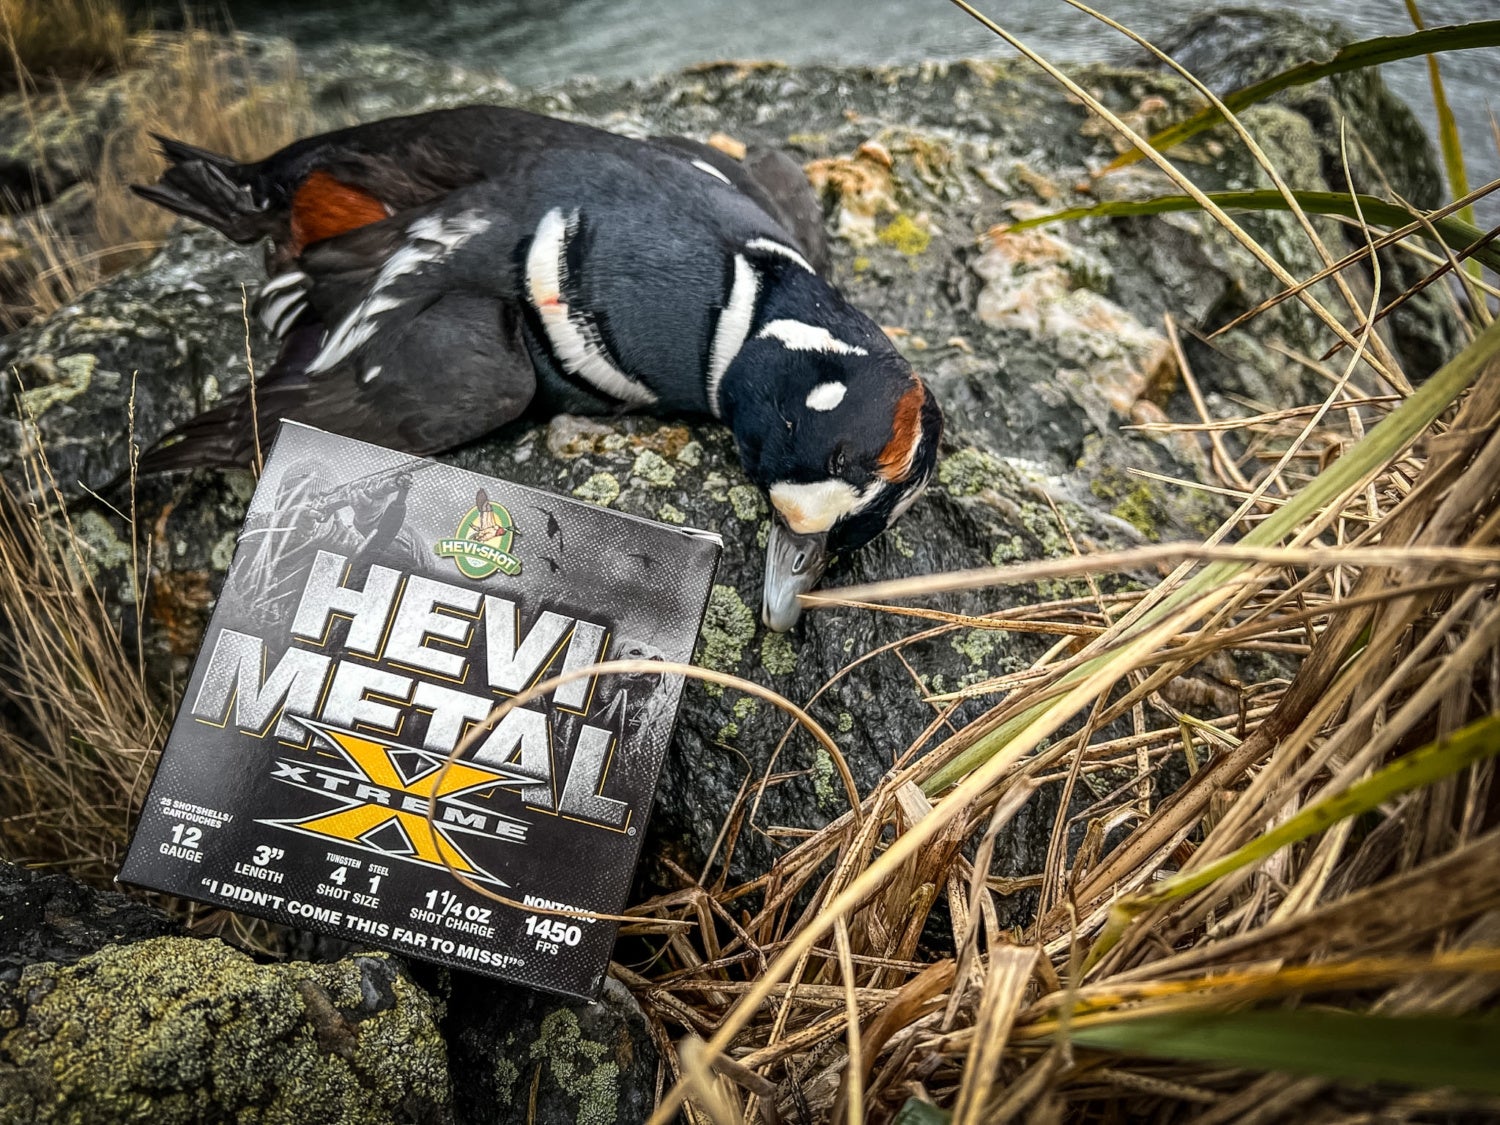 HEVI-Metal Xtreme